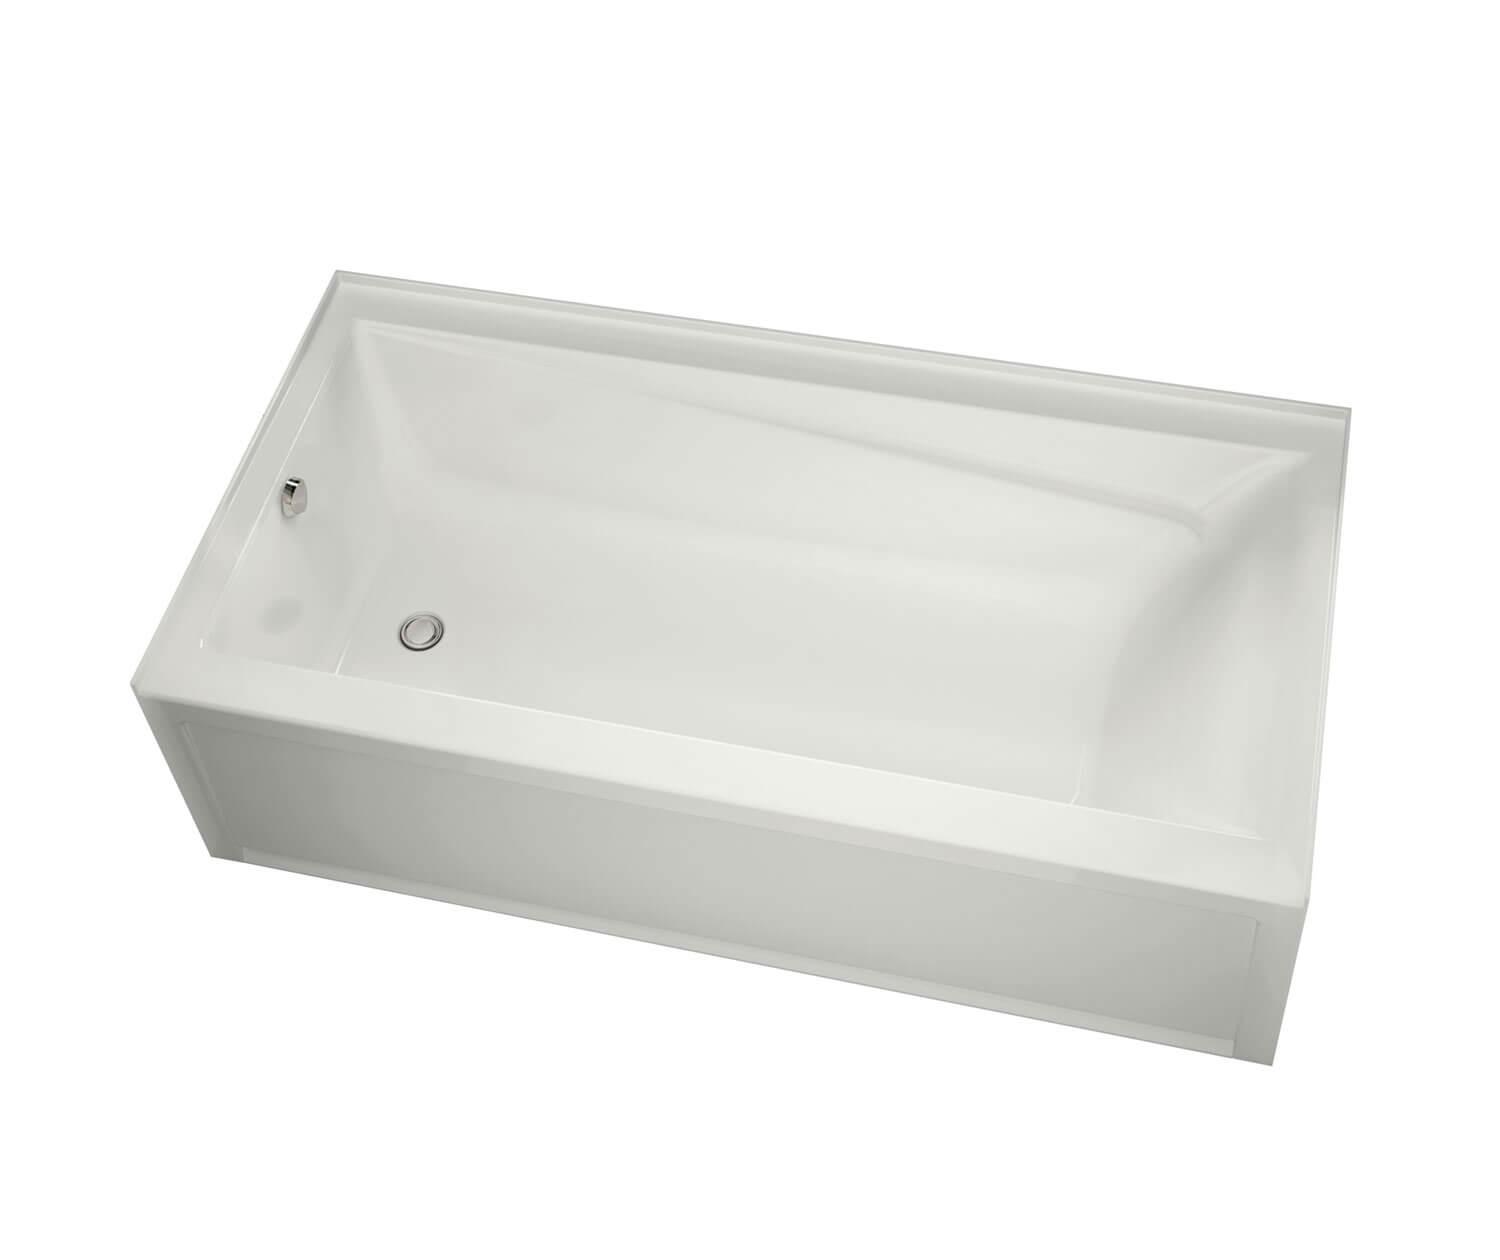 Maax Exhibit 7236 IFS Acrylic Alcove Left Hand Drain Bathtub in White 71 7/8" x 36" x 18" 106183 - Hbdepot